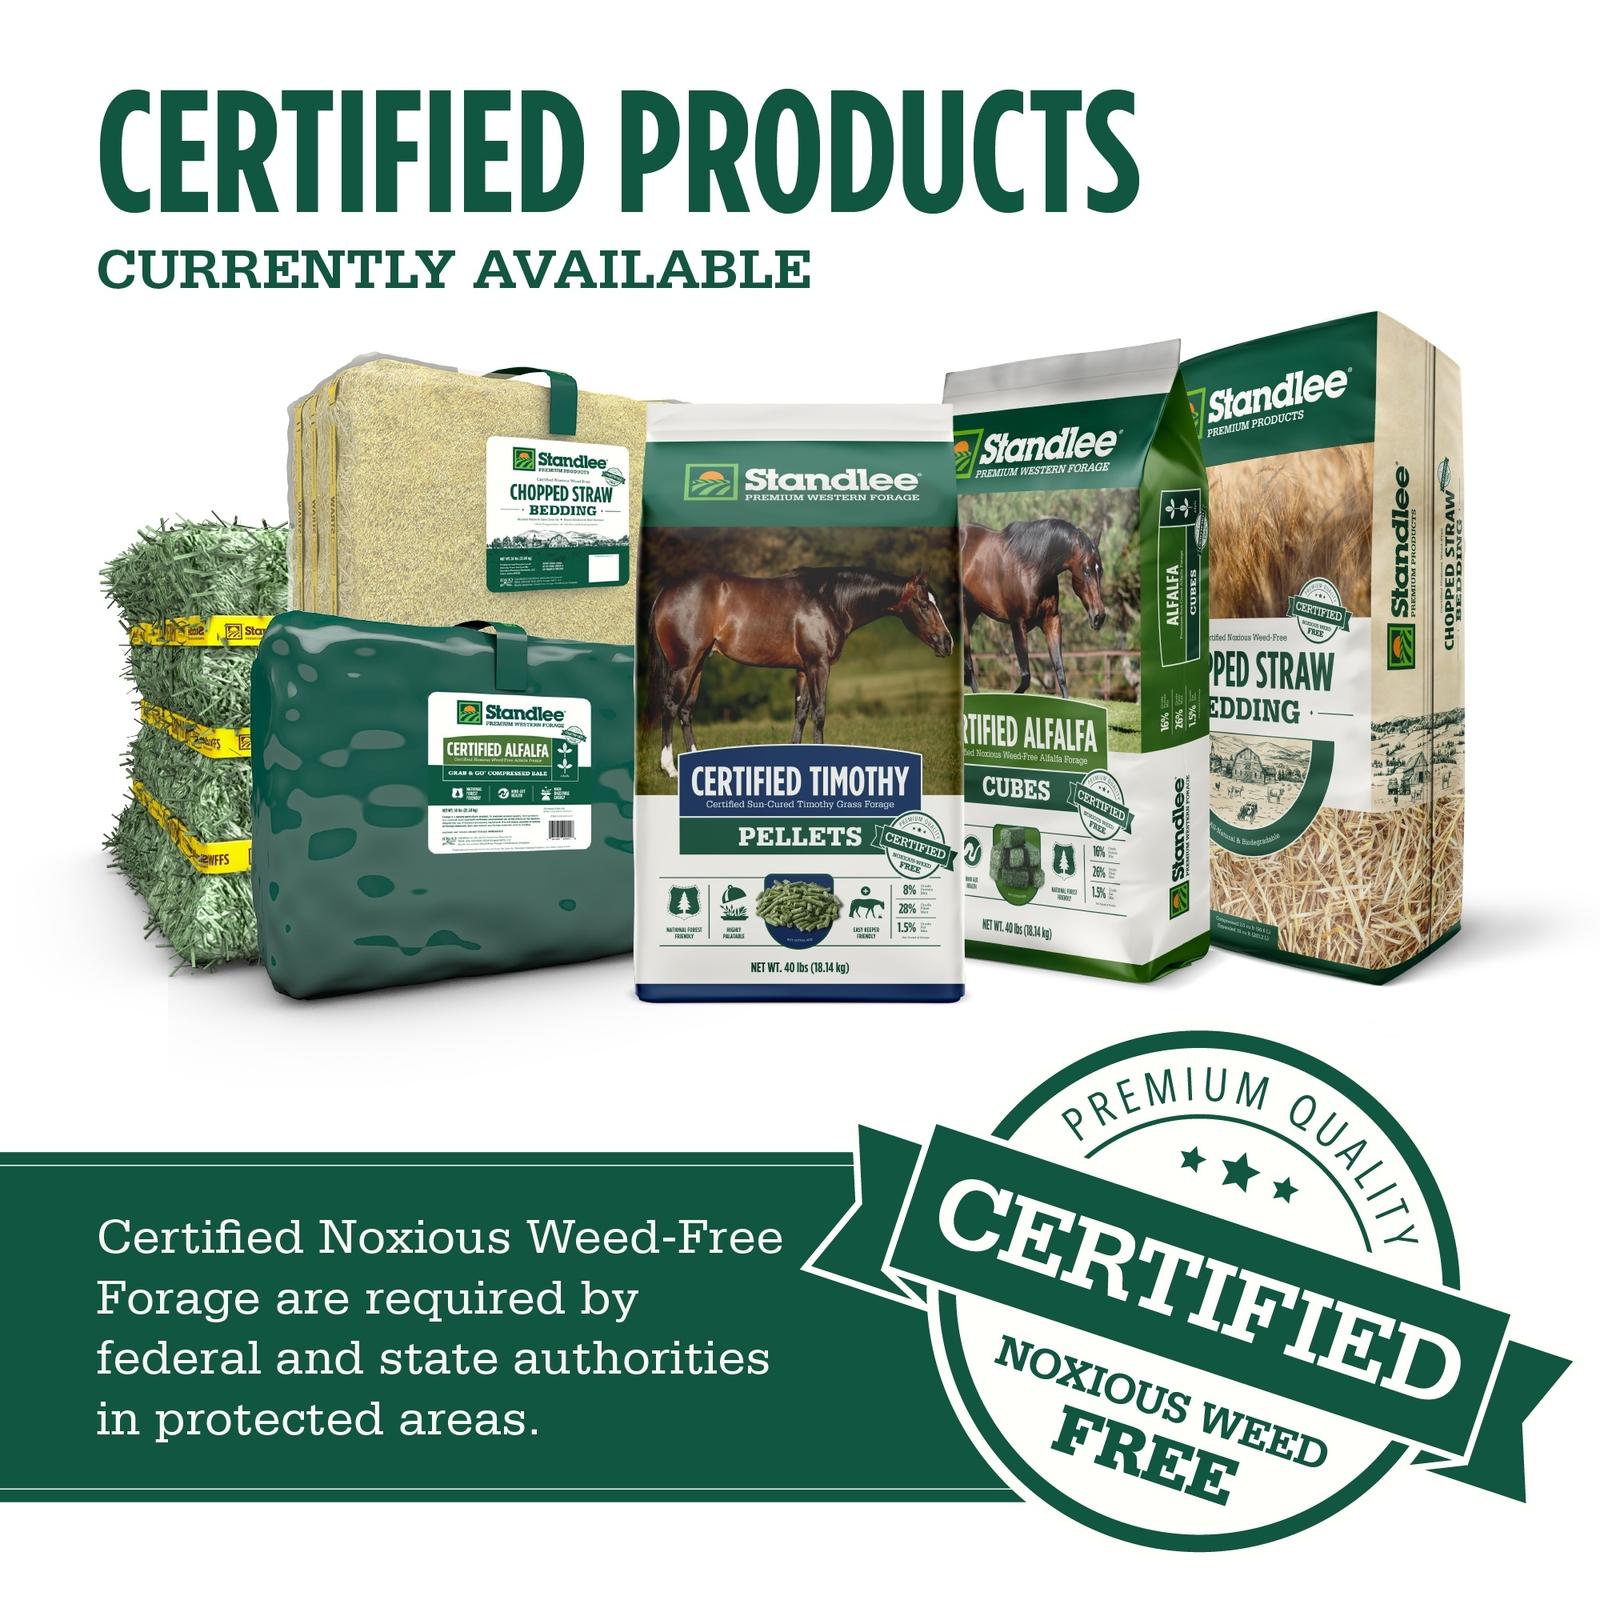 Standlee Certified Alfalfa Compressed Bale